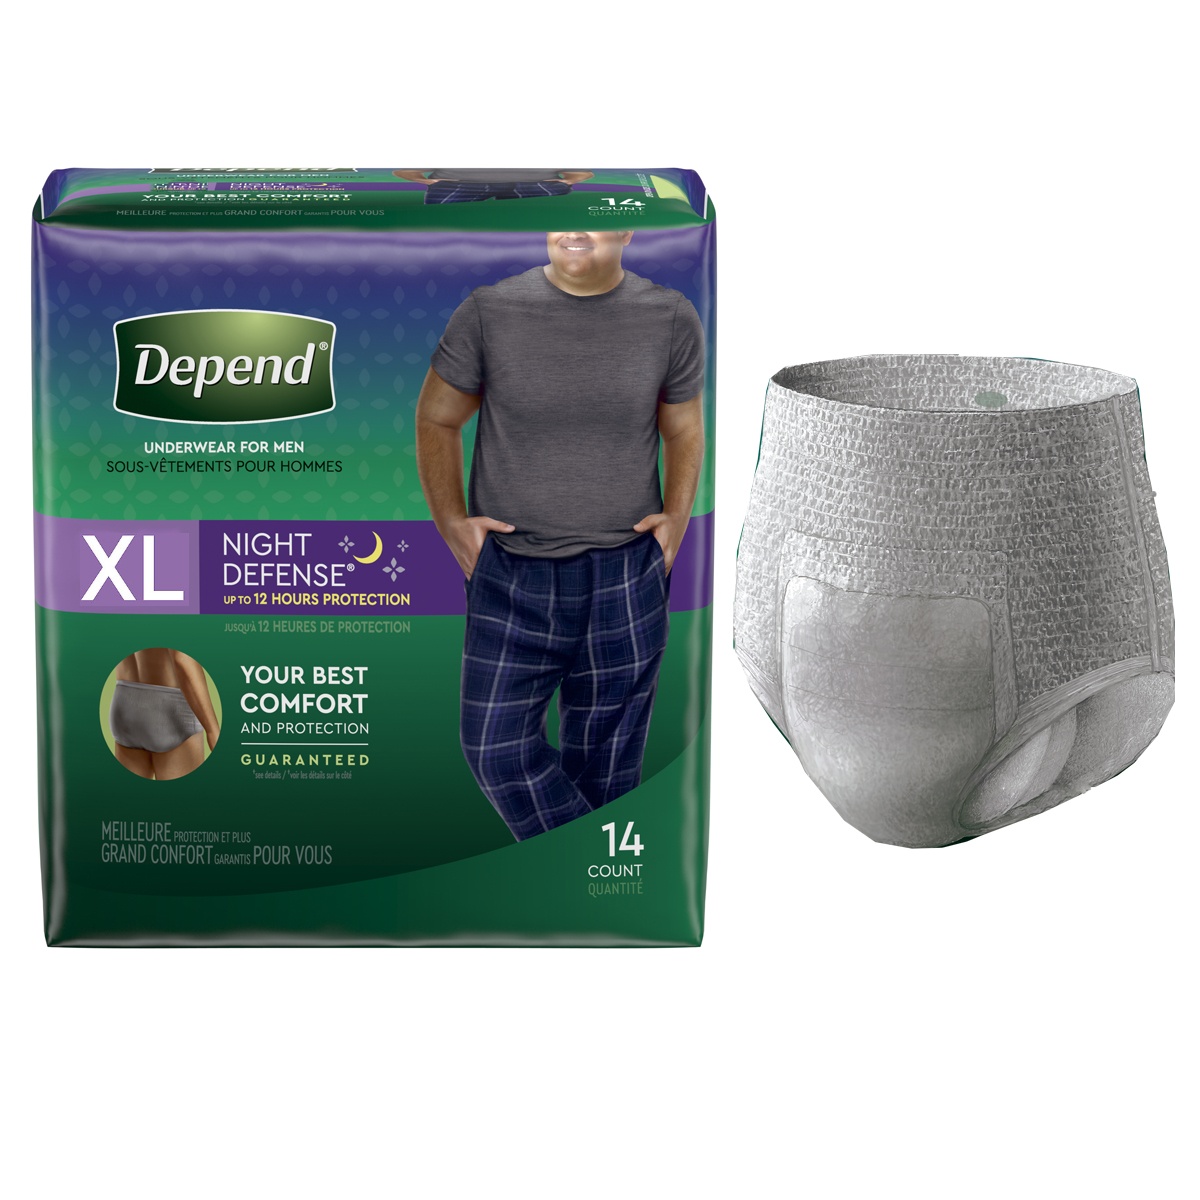 Depend Night Defense Pull-Up Underwear for Men, Overnight Absorbancy